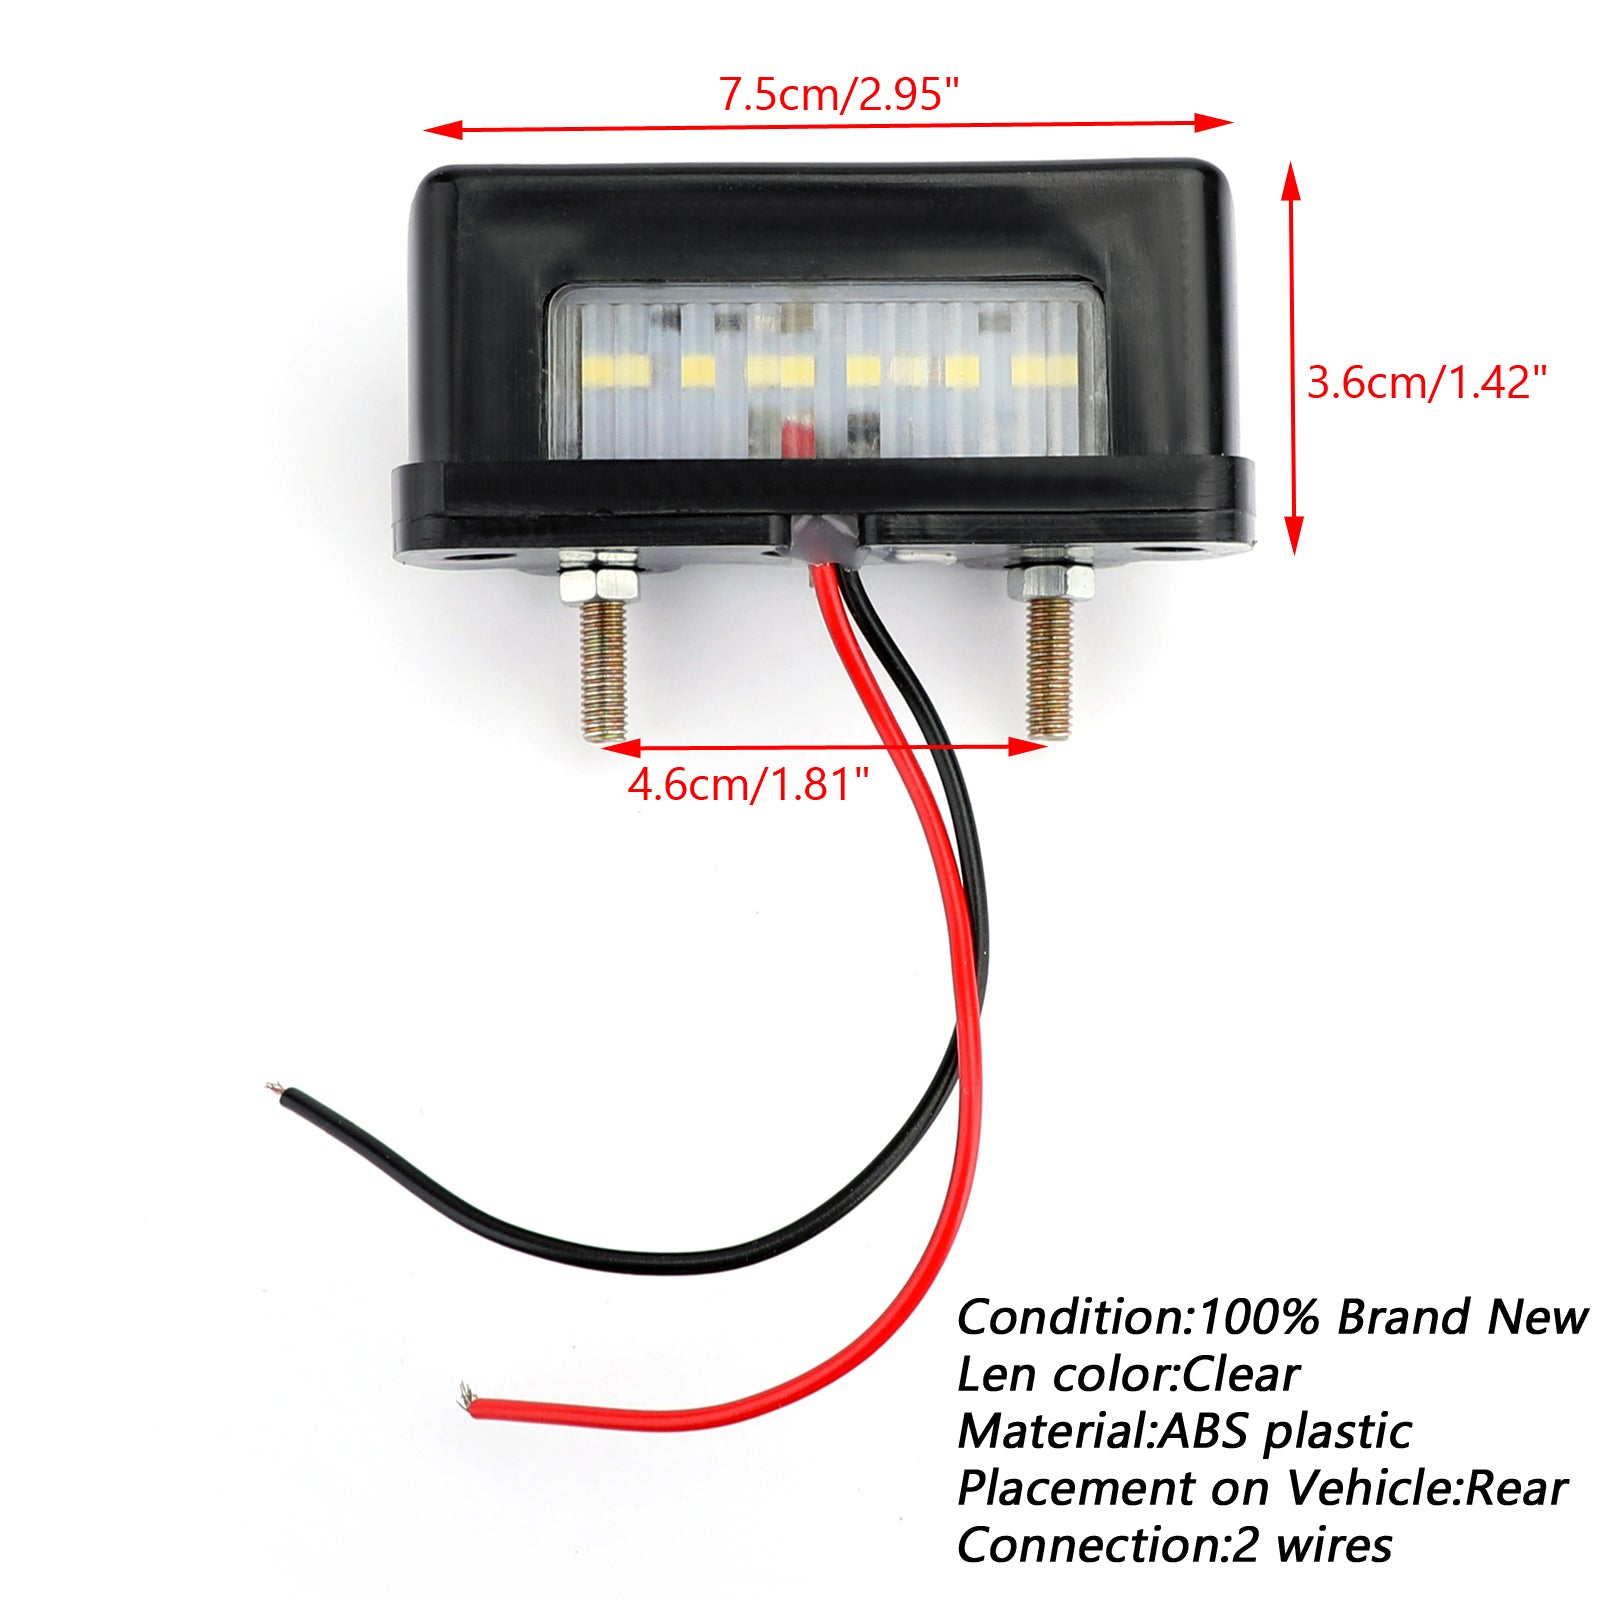 LED Rear License Plate Light Taillight Universal Black